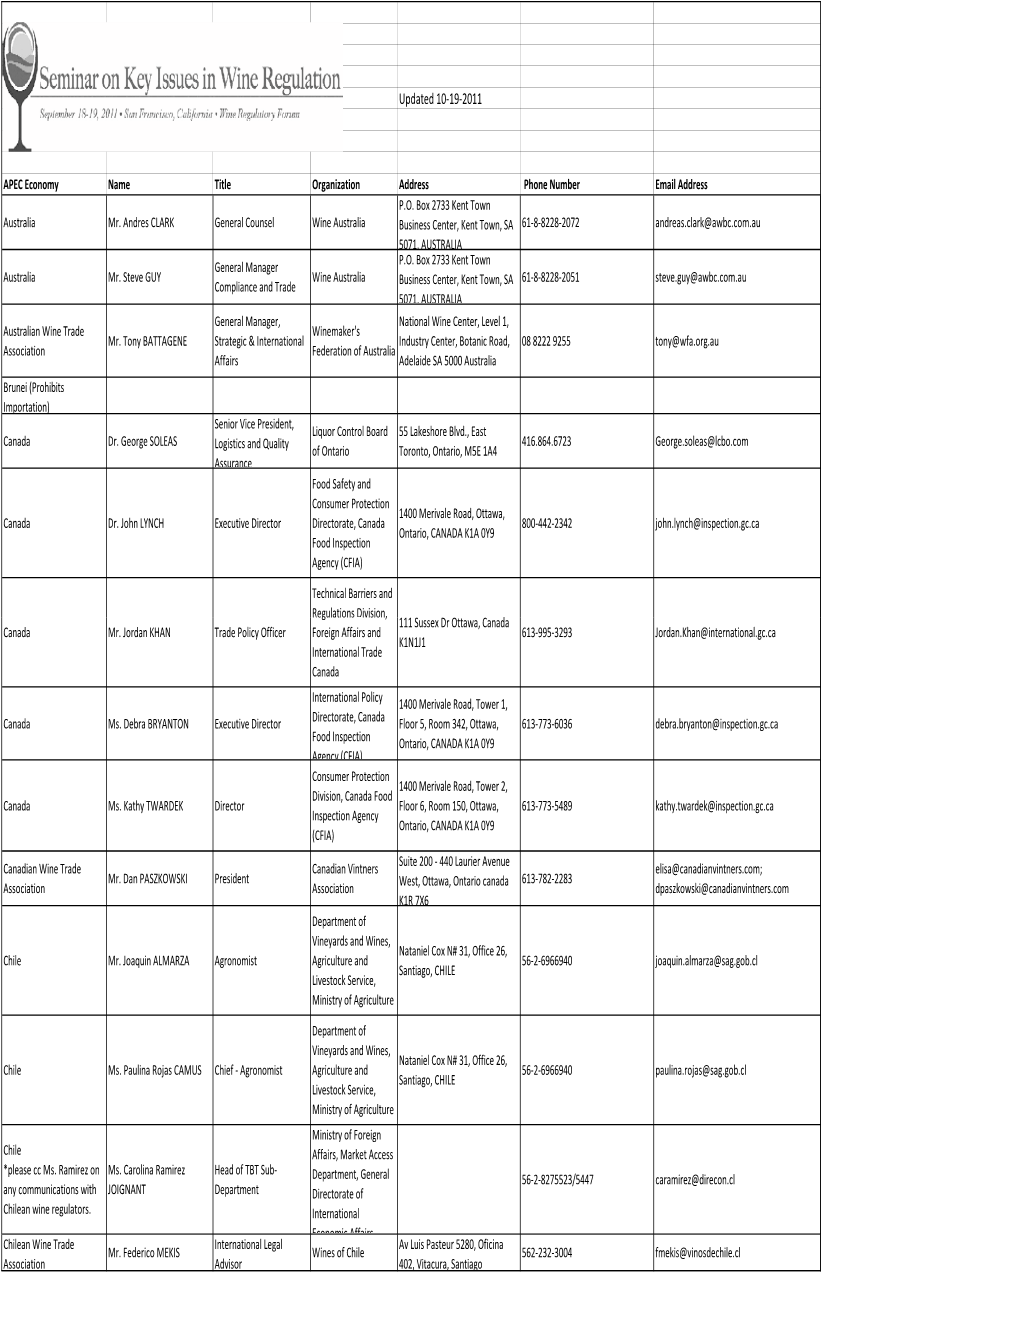 APEC Wine Regulatory Forum Contact List 10-19-2011